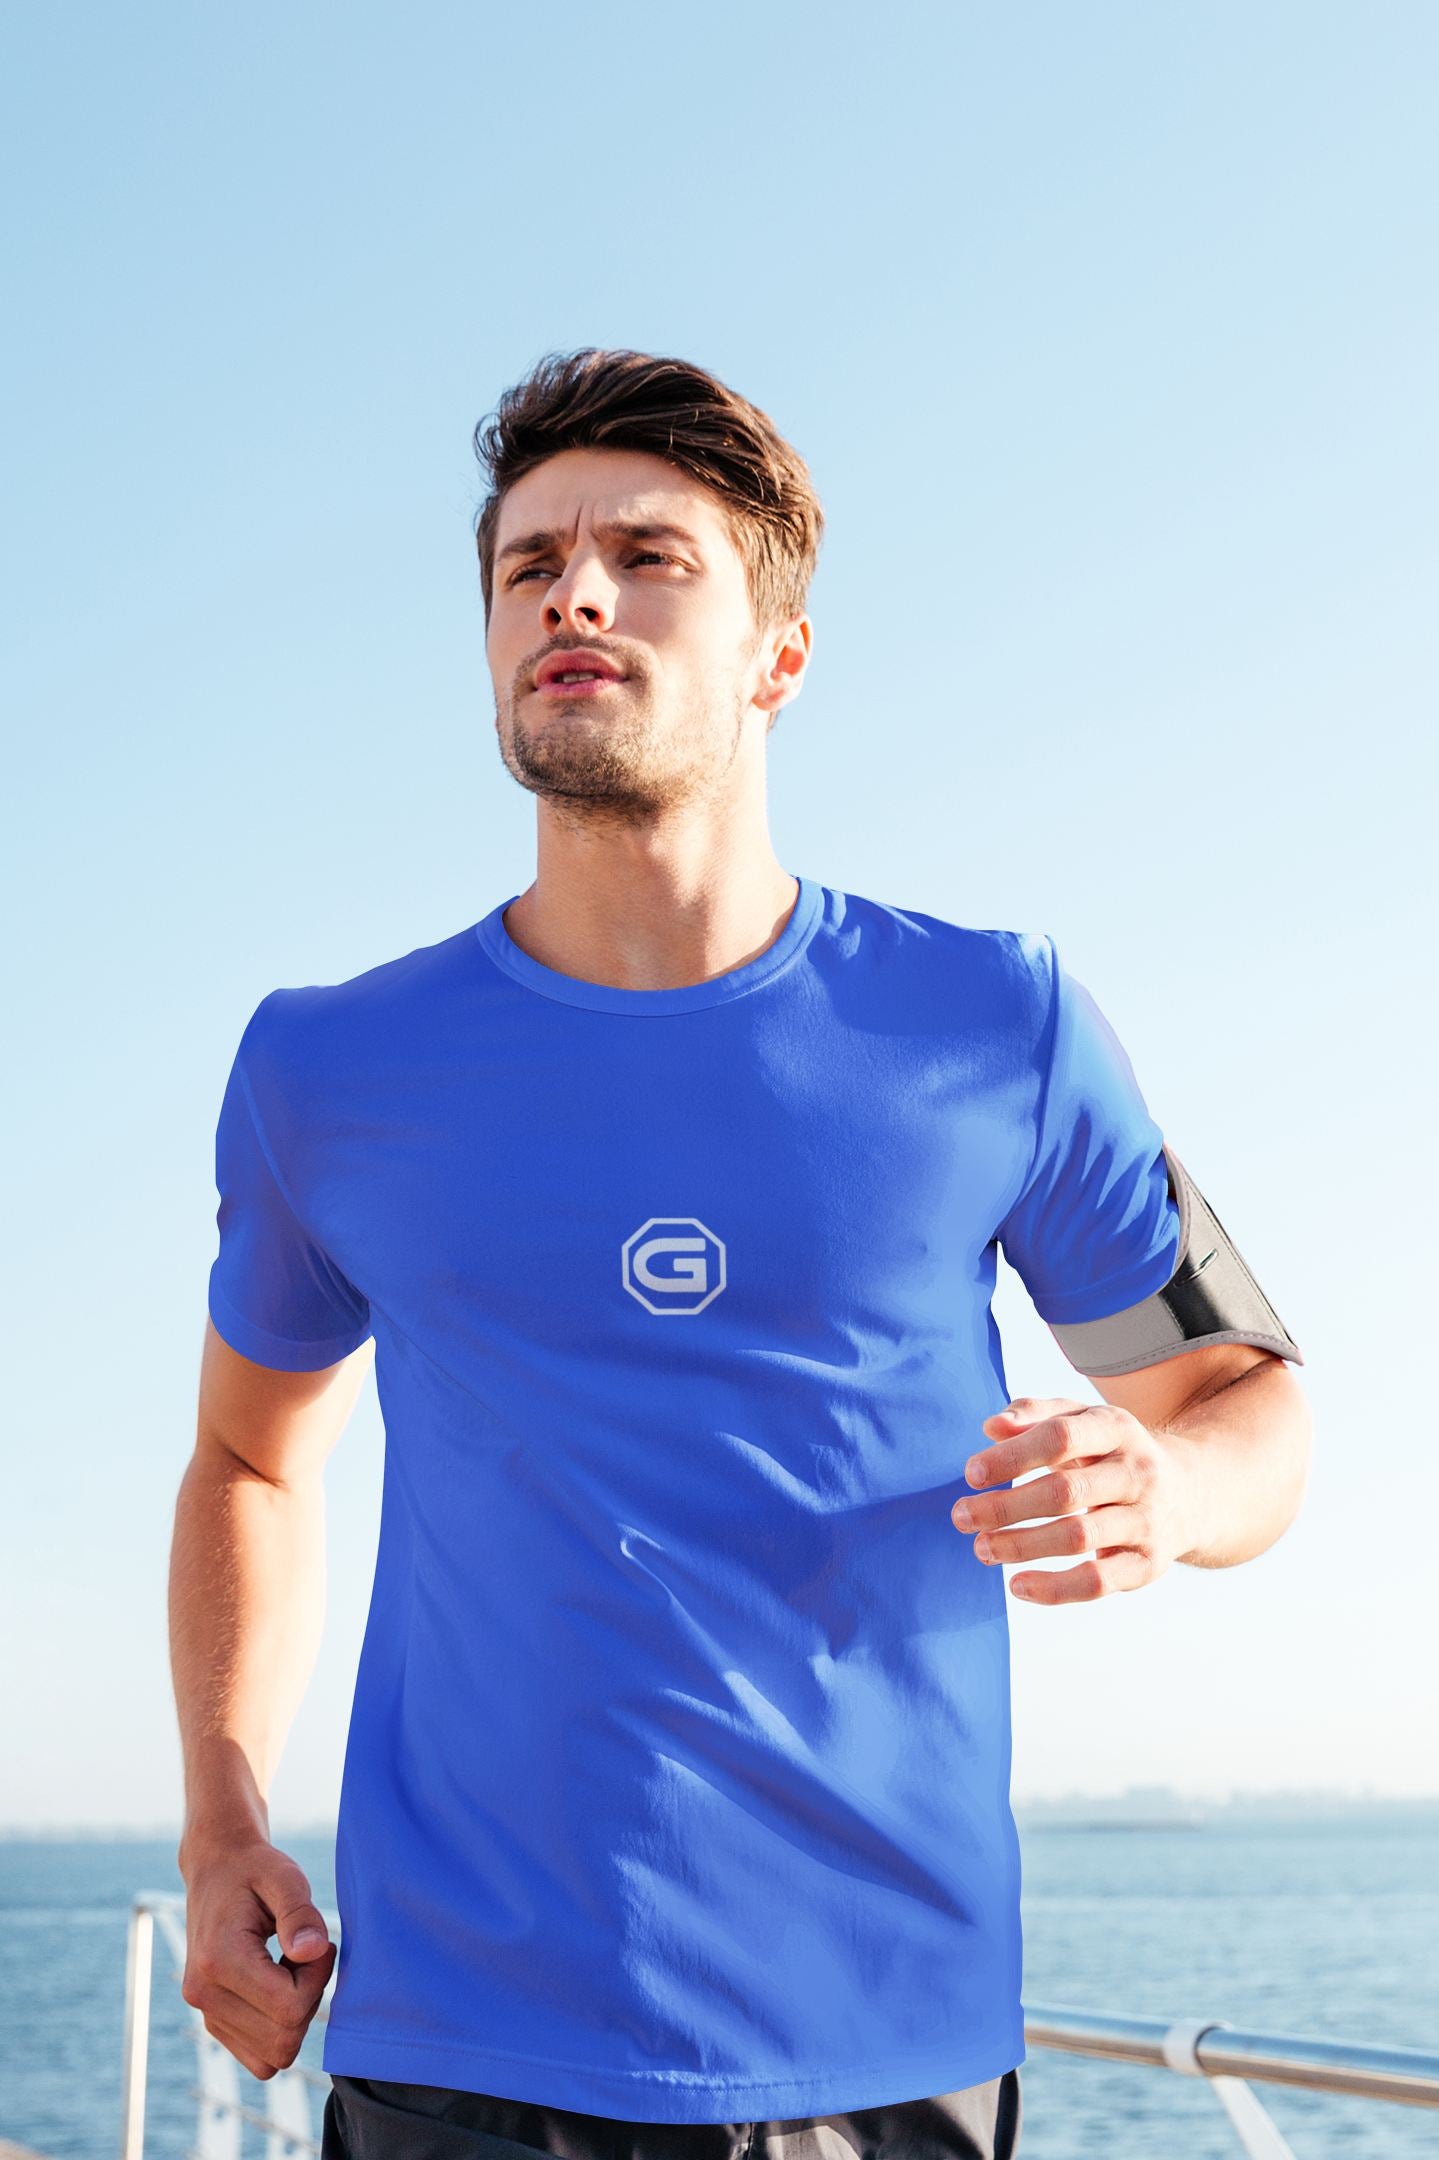 Stylish T shirts for men Active / Leisure Wear | Gymate Large G logo blue